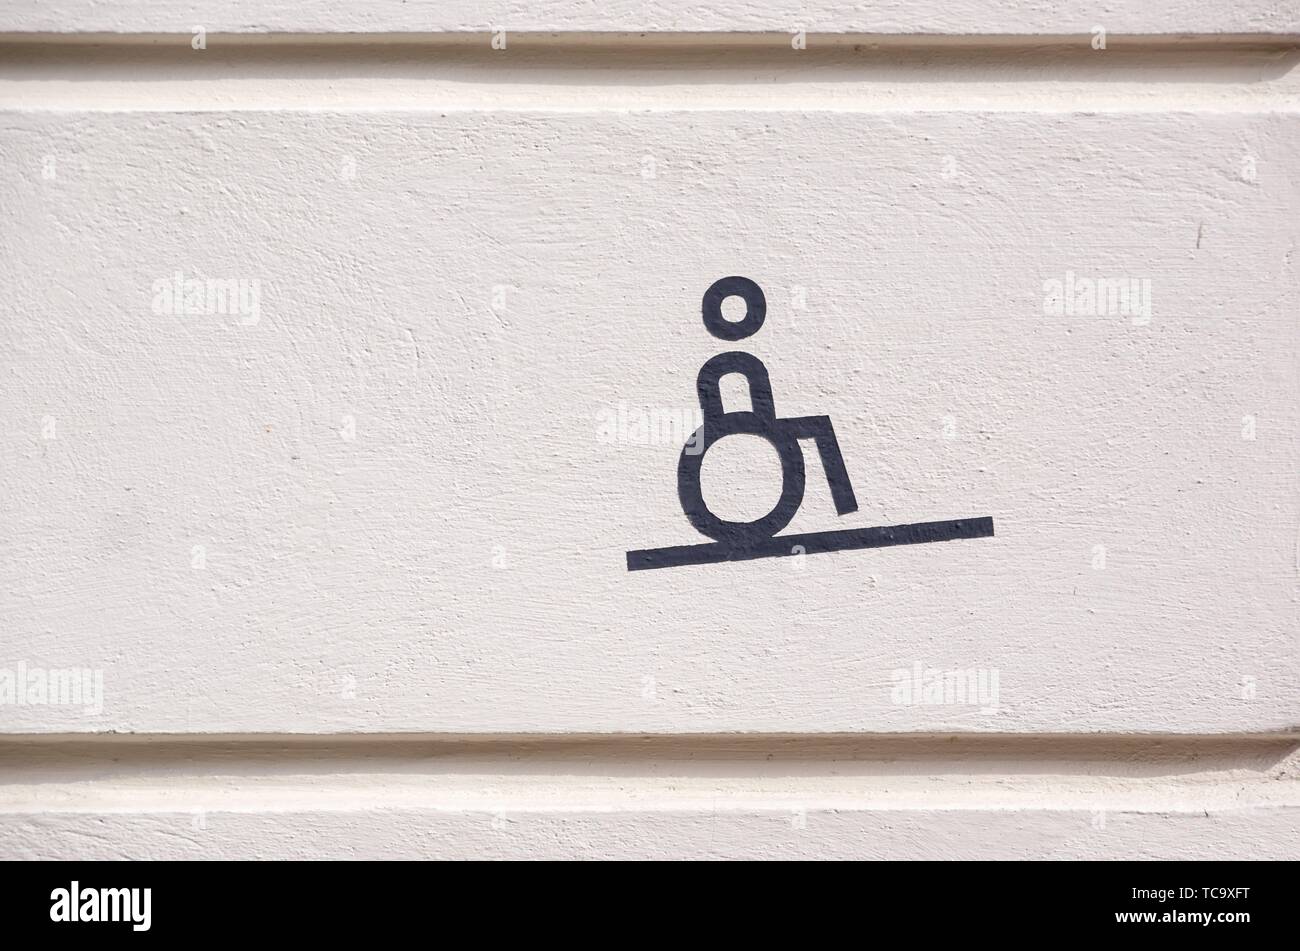 Symbol für Rollstuhlfahrer zeigt Barrierefreiheit an. Símbolo de accesibilidad para sillas de ruedas. Foto de stock